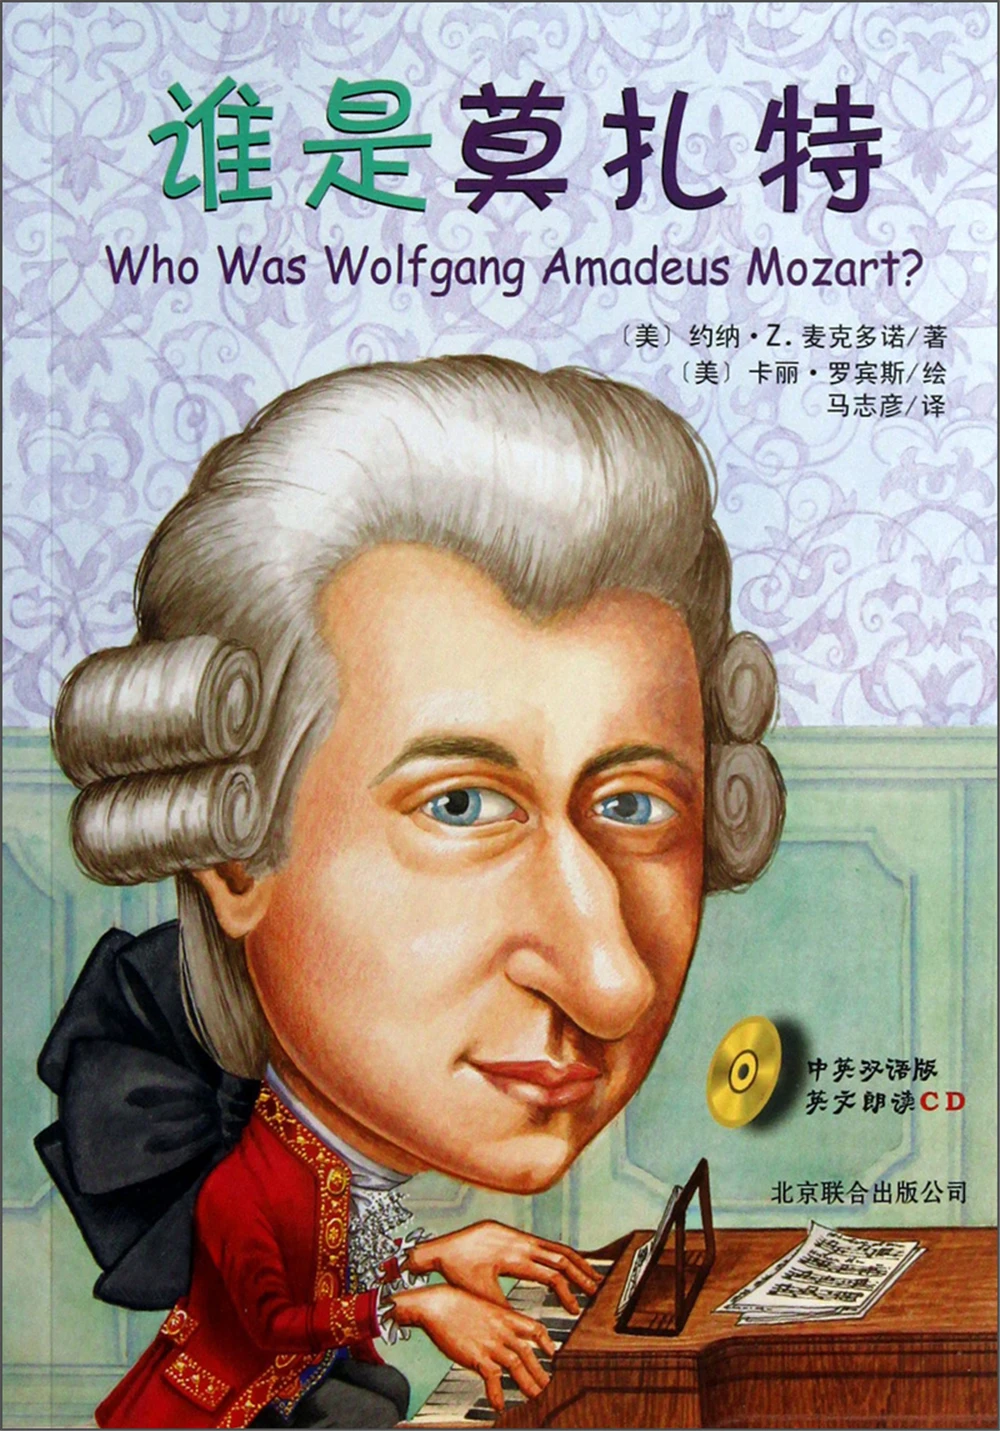 Young Amadeus Mozart